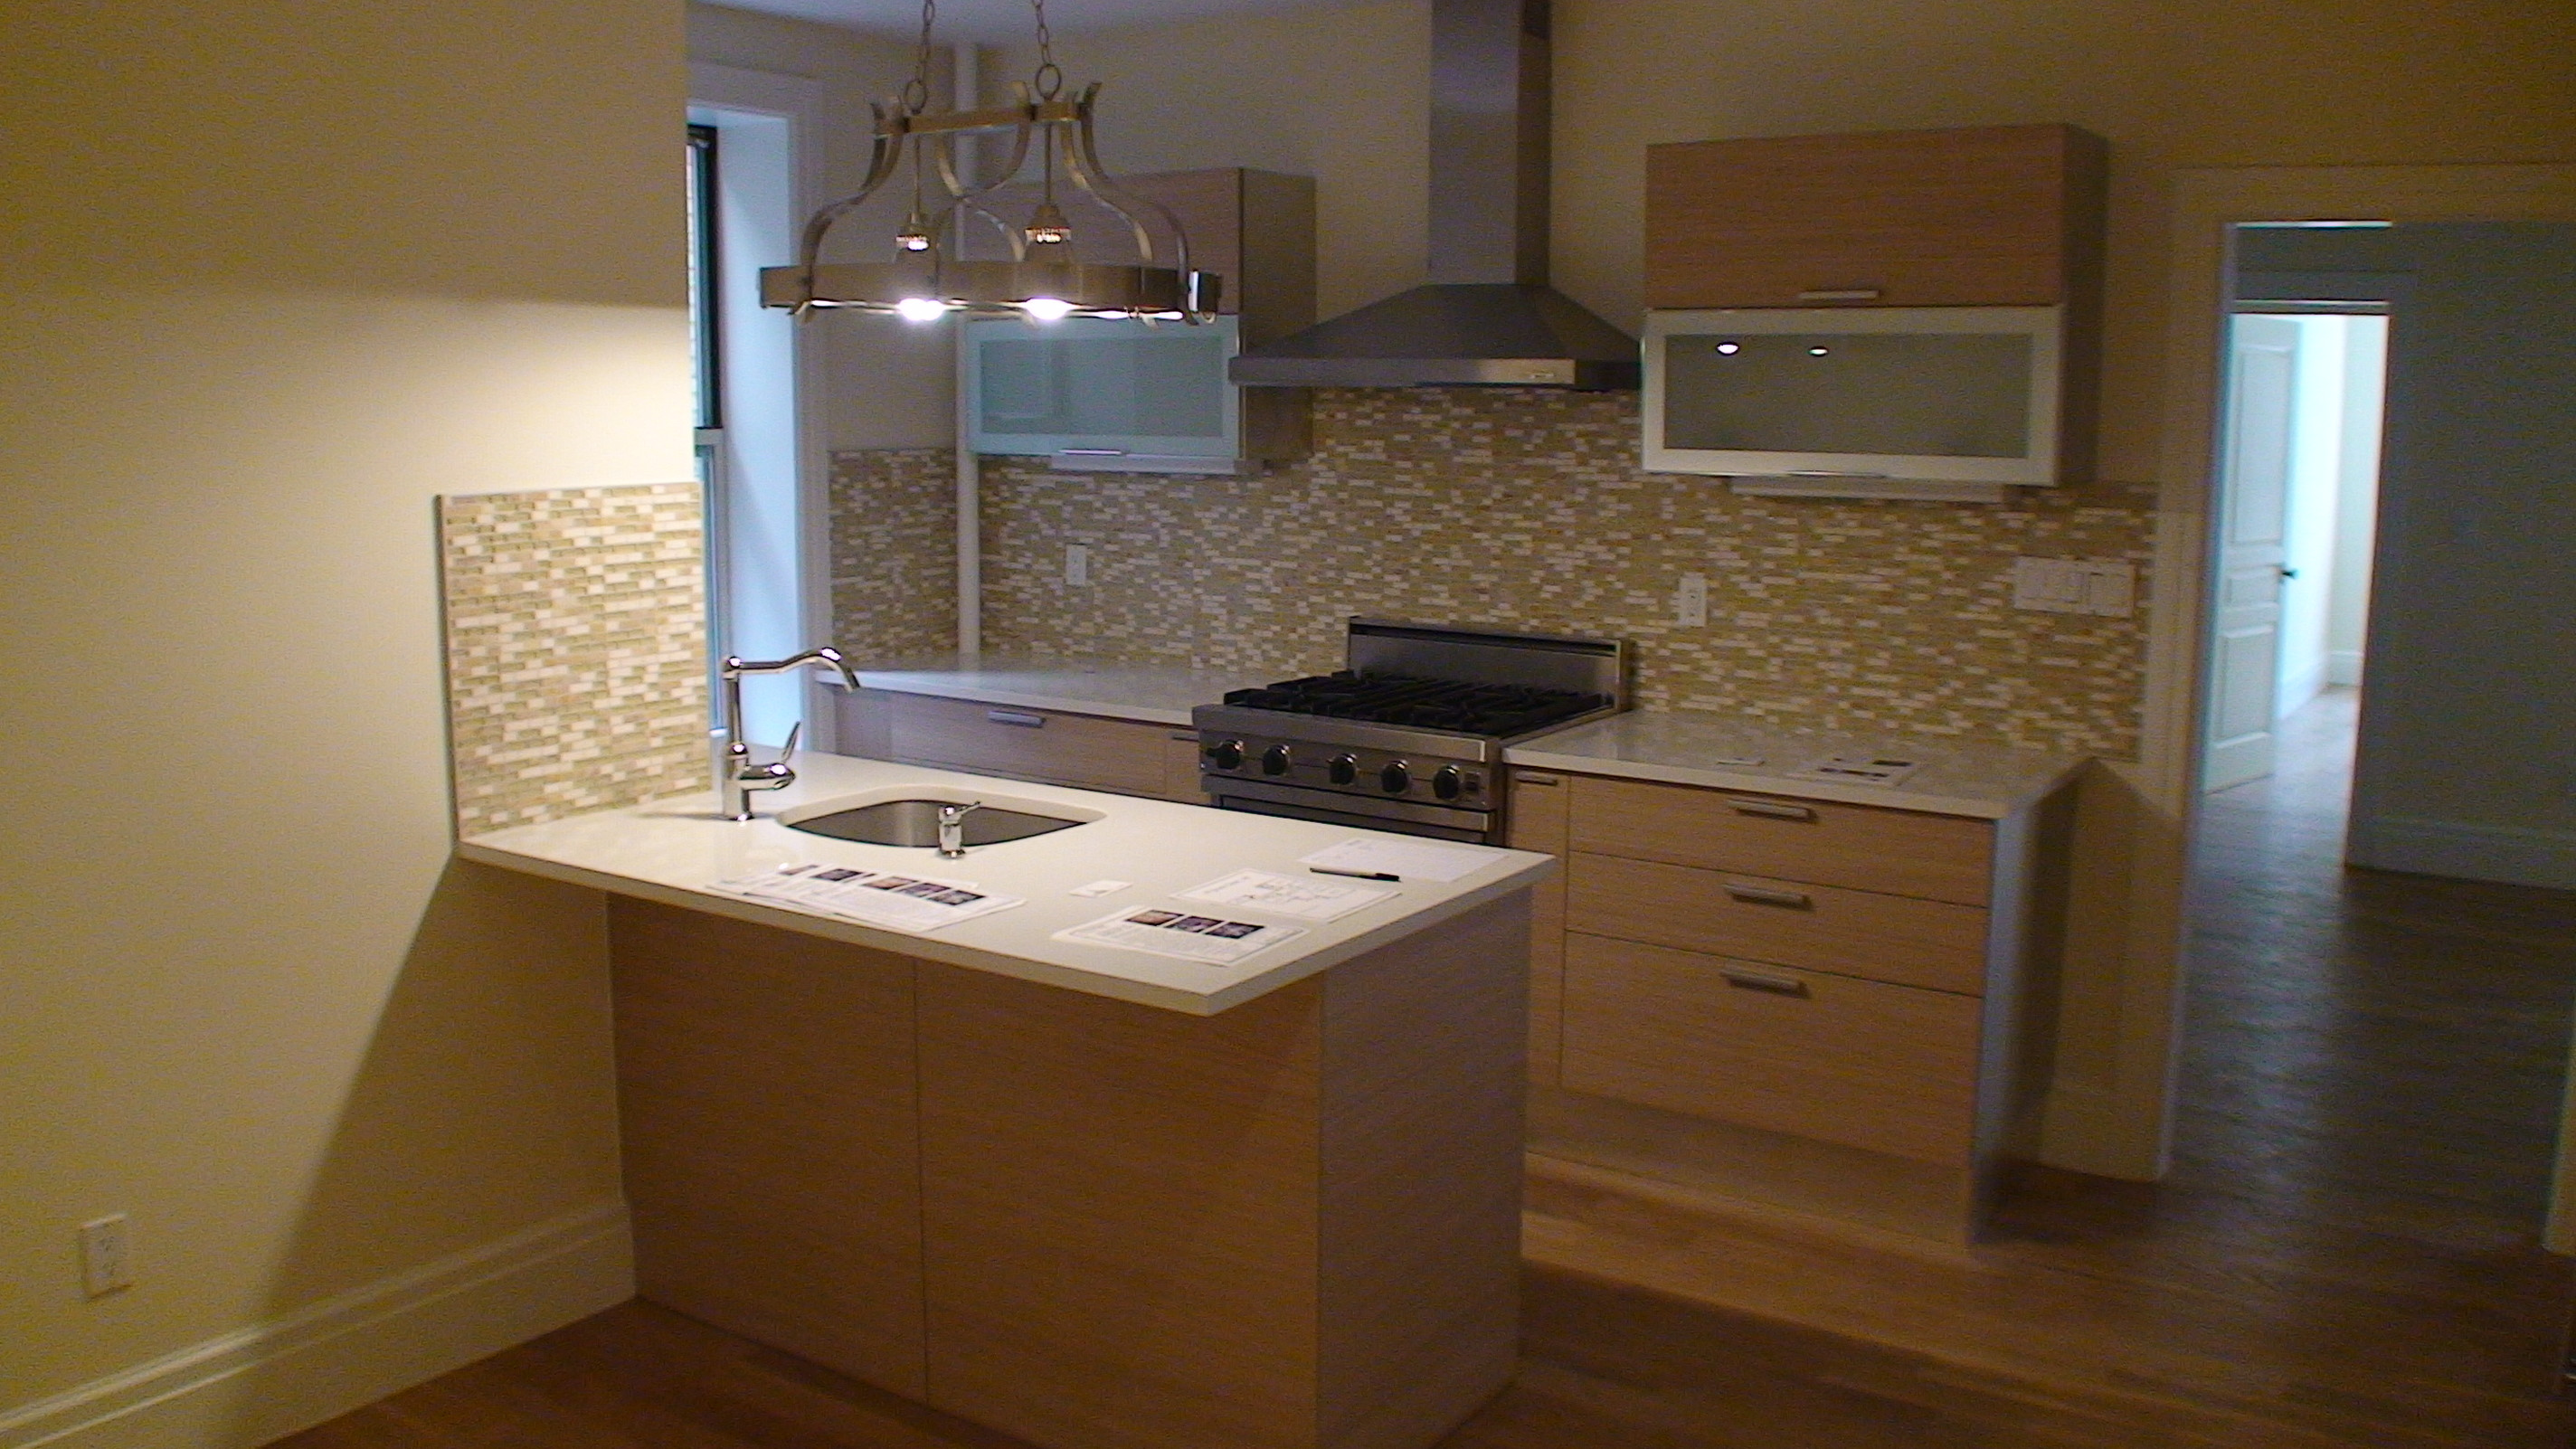 Best ideas about Studio Kitchen Ideas
. Save or Pin Studio Apartment Kitchen Appliances Latest BestApartment Now.